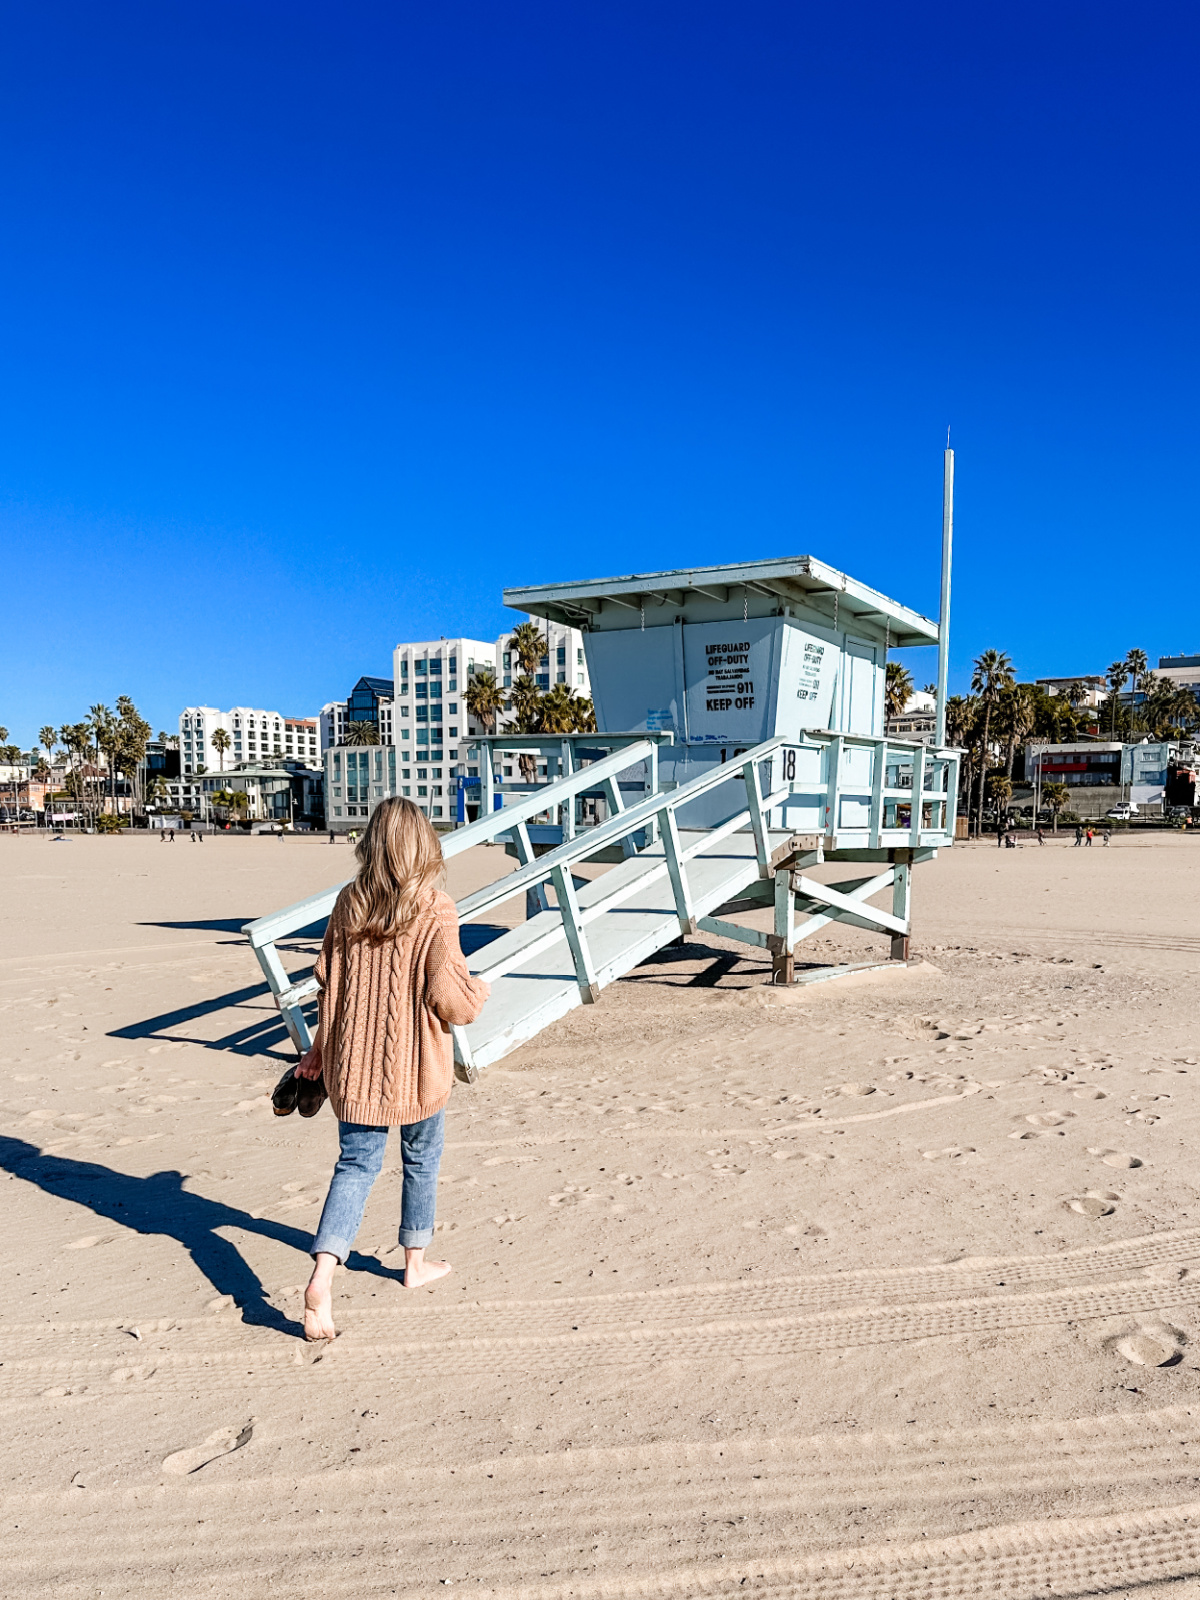 Woman walking on beach toward lifeguard tower.